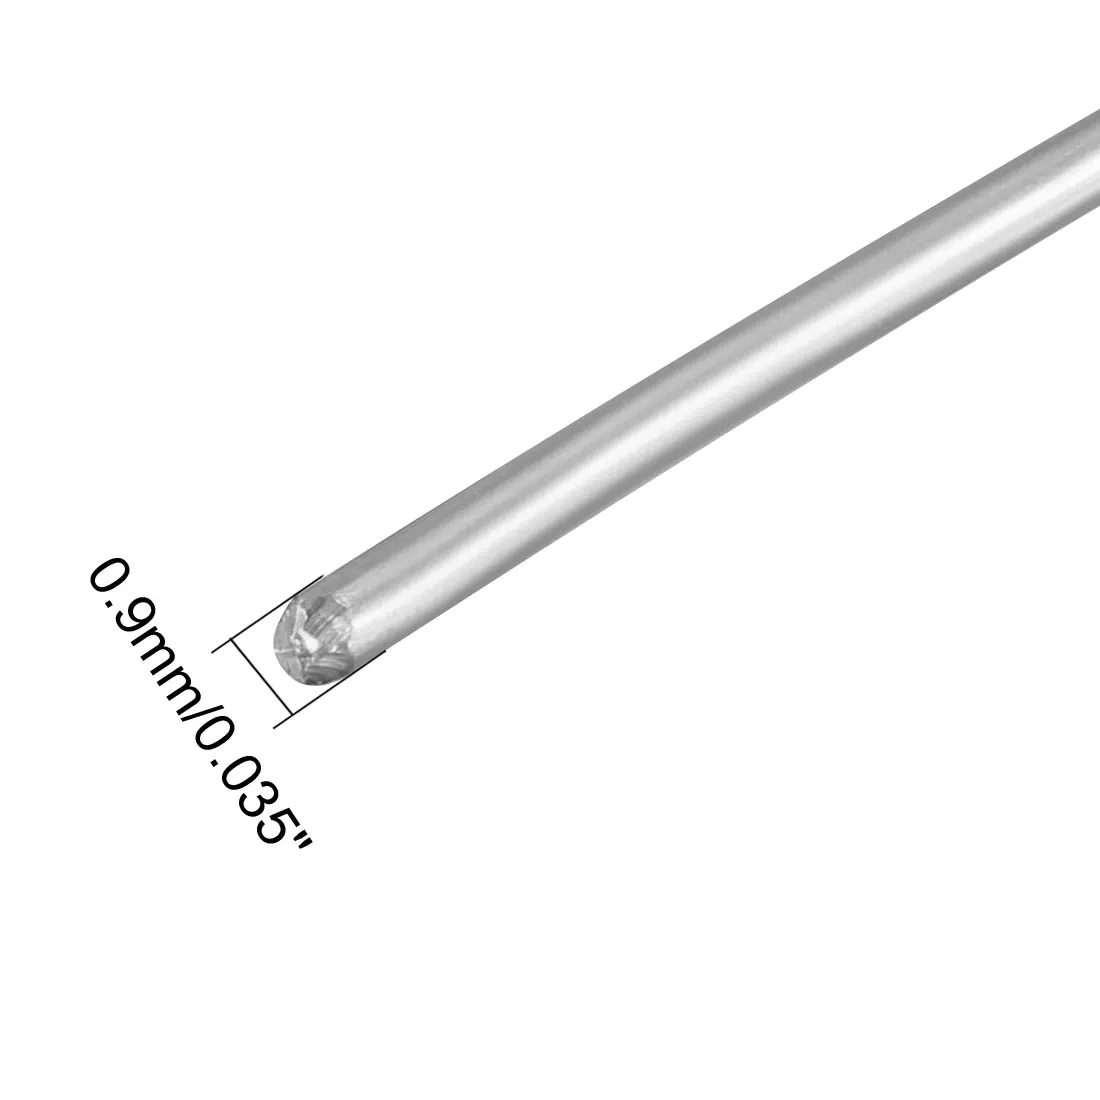 Uxcell сверхтонкая нагревательная проволока FeCrAl резистор проволока для нагревательных элементов 0,7 мм-0,9 мм Диаметр 0.9mmx230ft DxL от AliExpress RU&CIS NEW